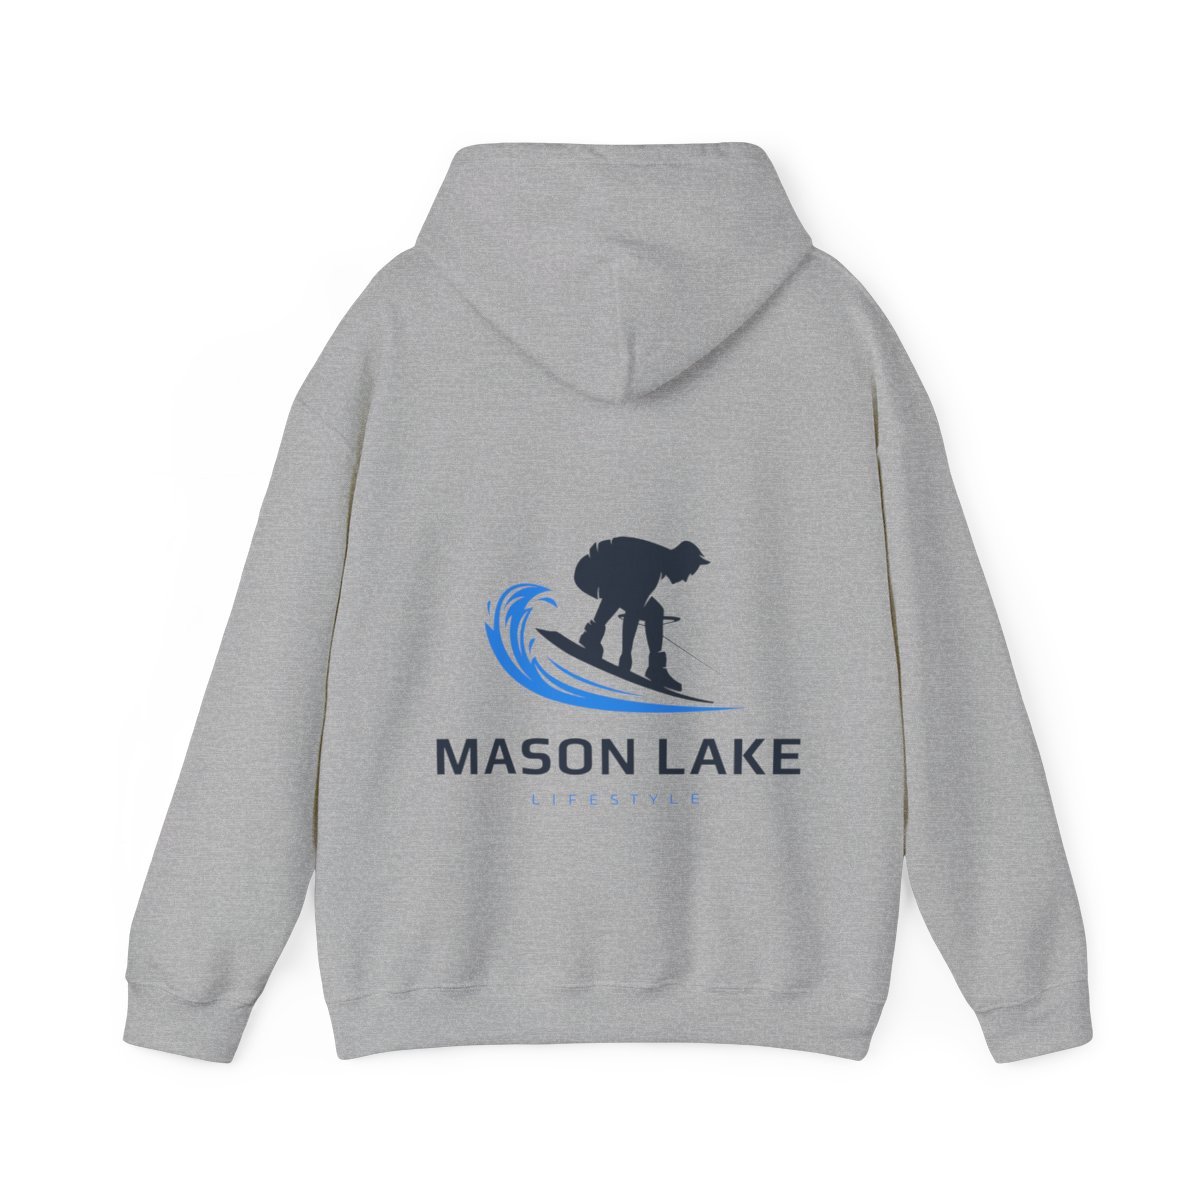 Mason Lake wakeboarder Hoodie product main image